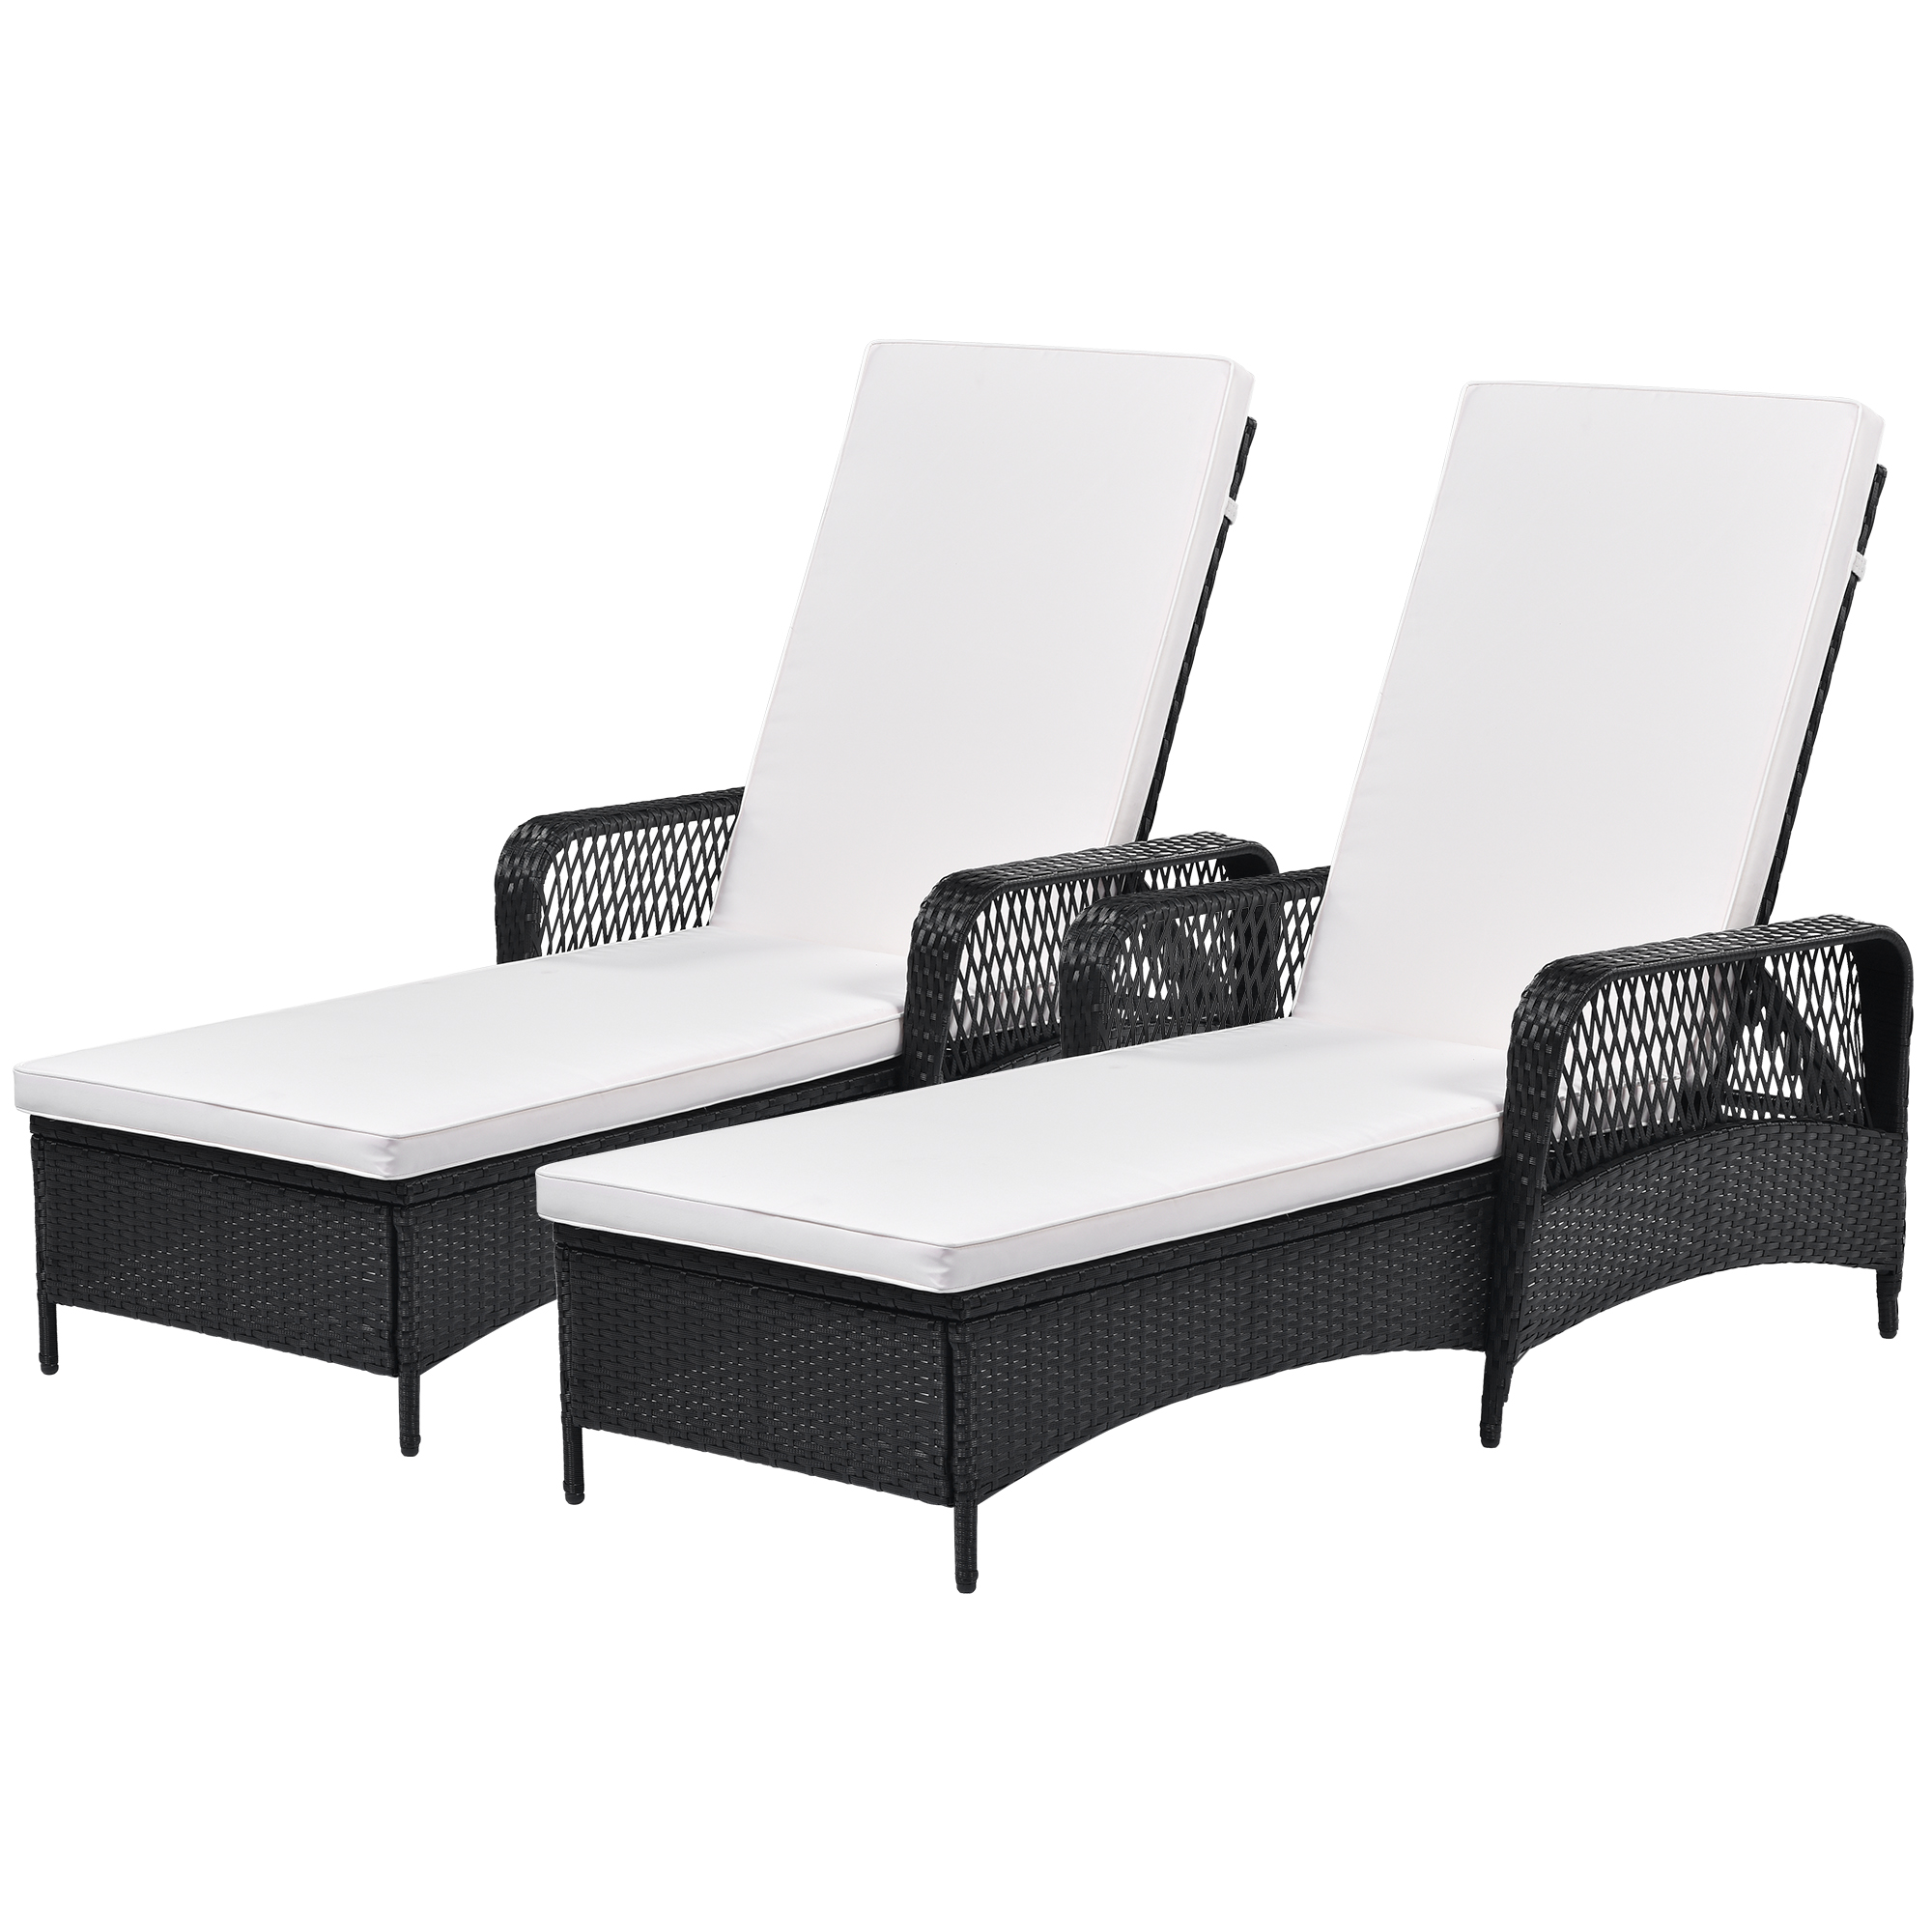 Casainc Outdoor patio pool PE rattan wicker chair wicker sun lounger, Adjustable backrest, beige cushion, Black wiker (2 sets)-CASAINC